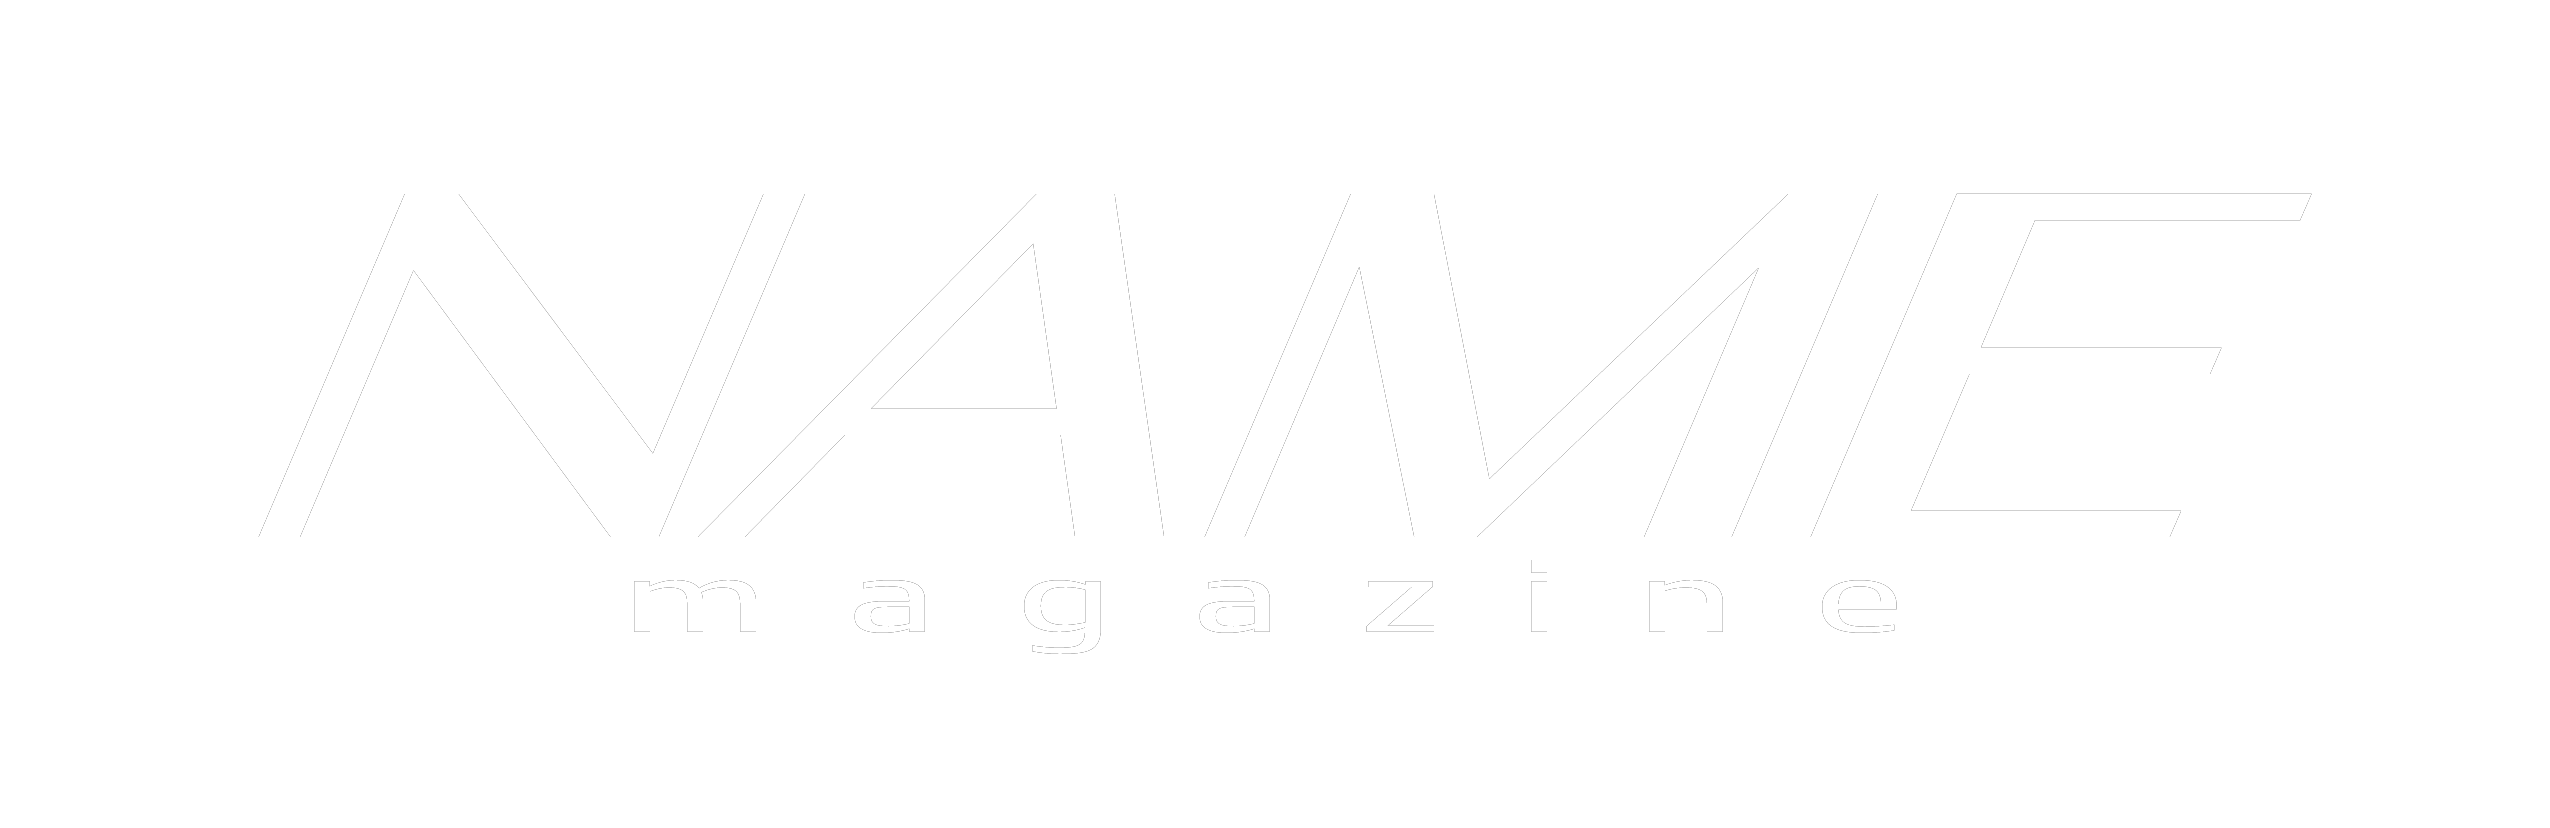 Name Magazine